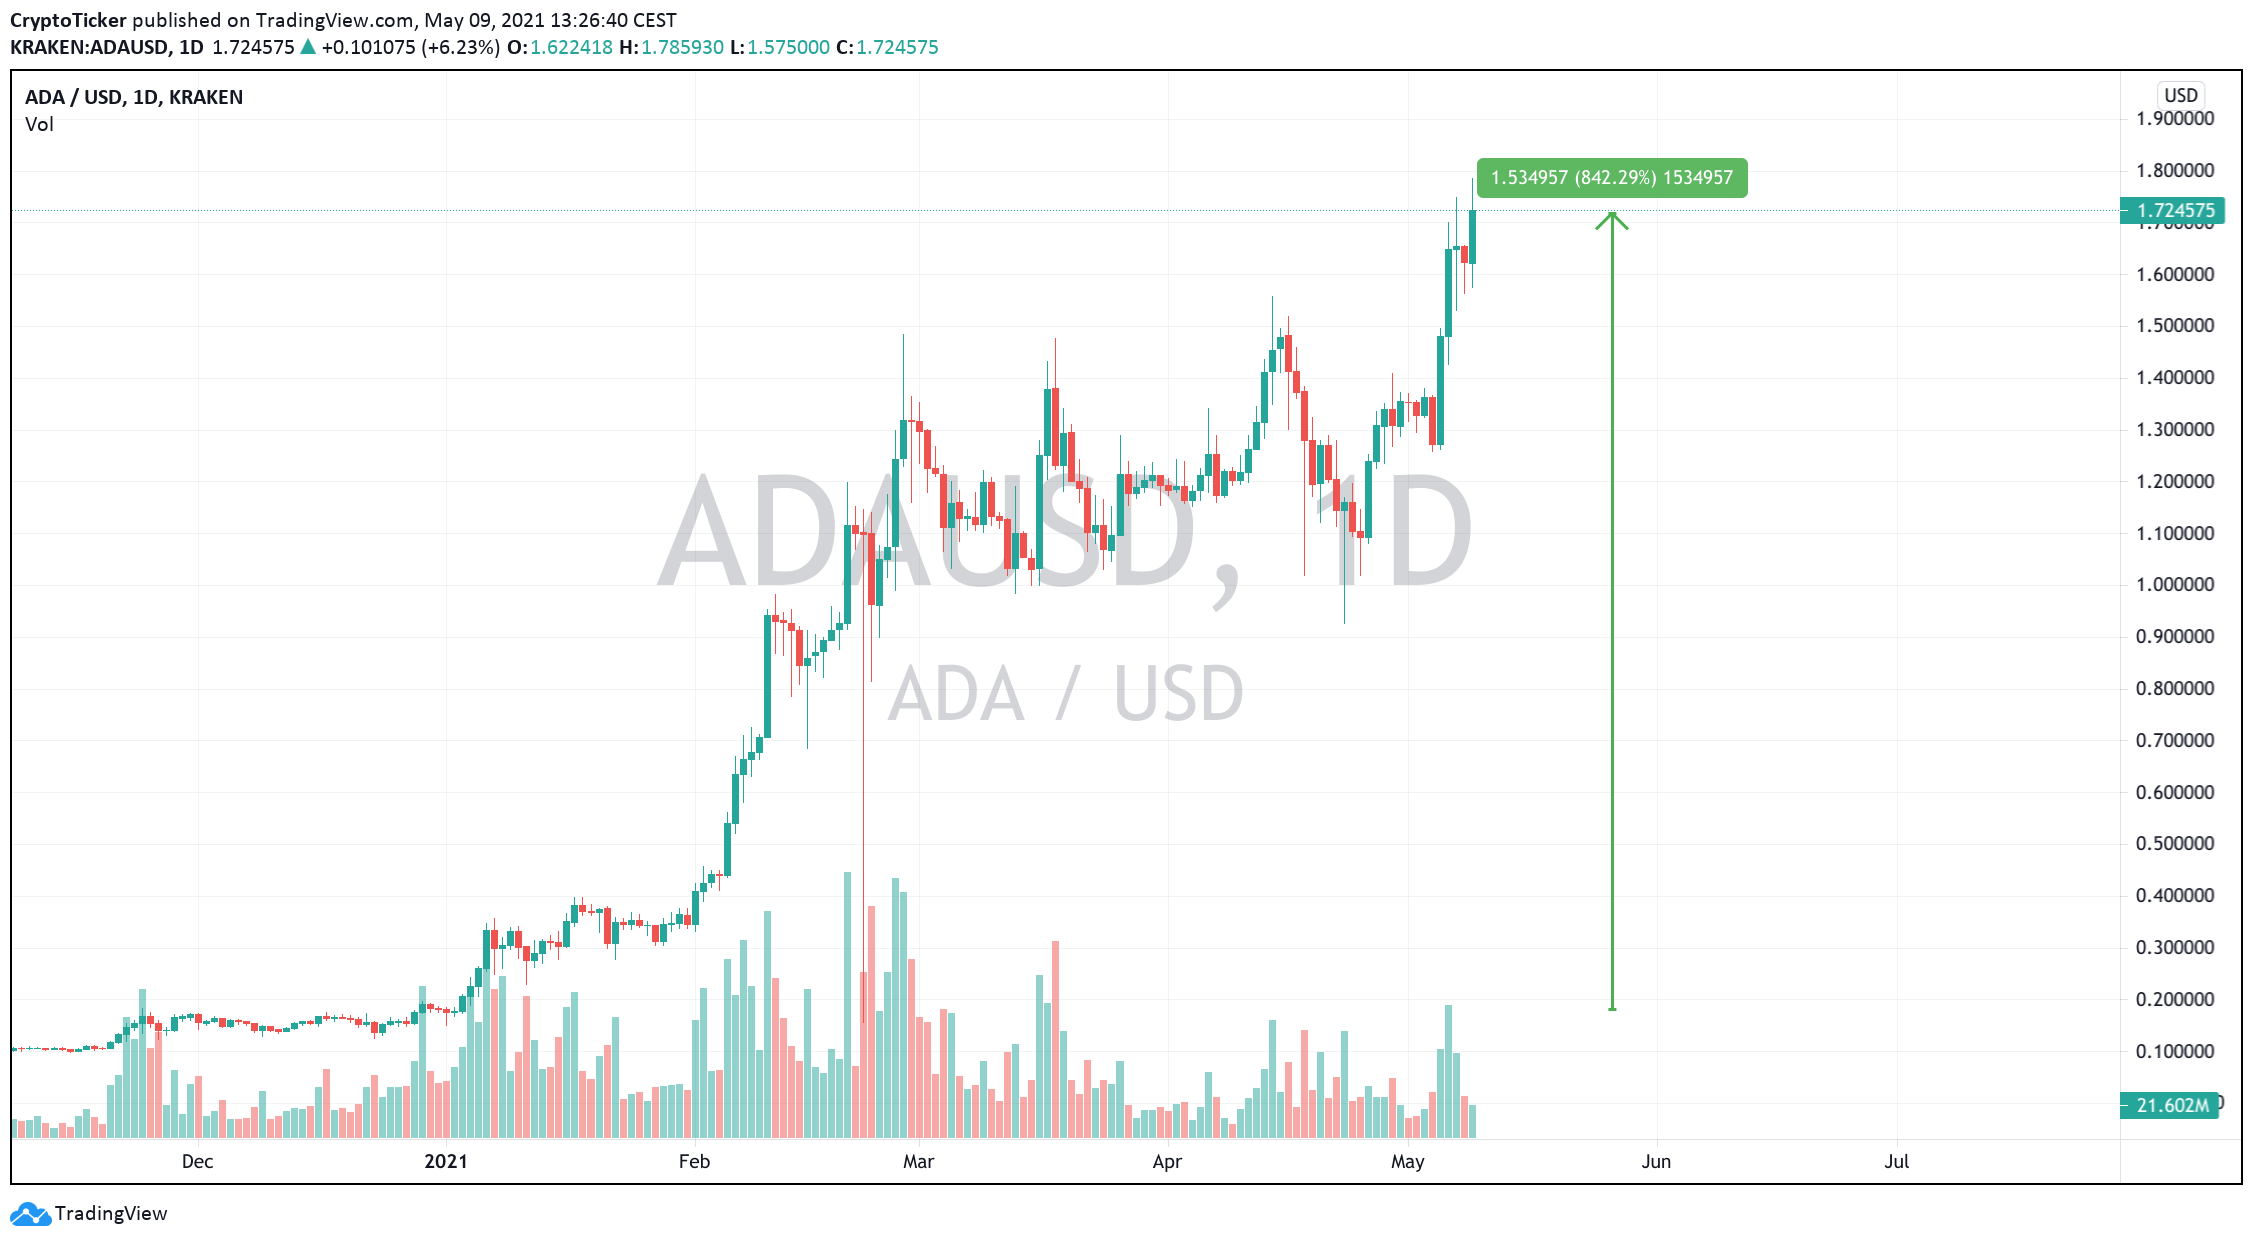 ADA/USD 1-day chart showing ADA's performance YTD